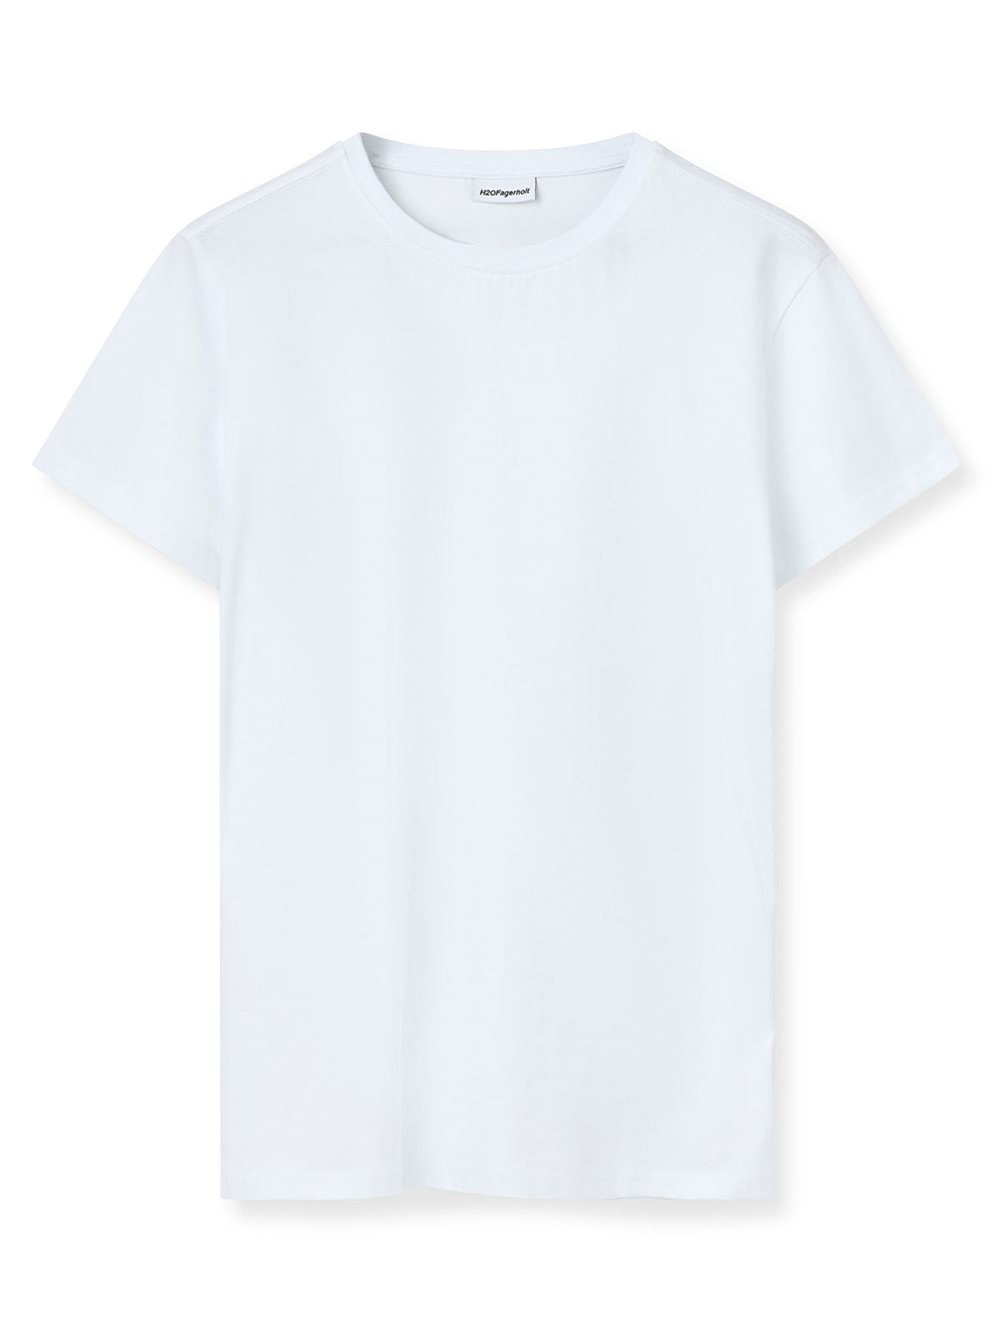 The Tee T-shirt White Unisex